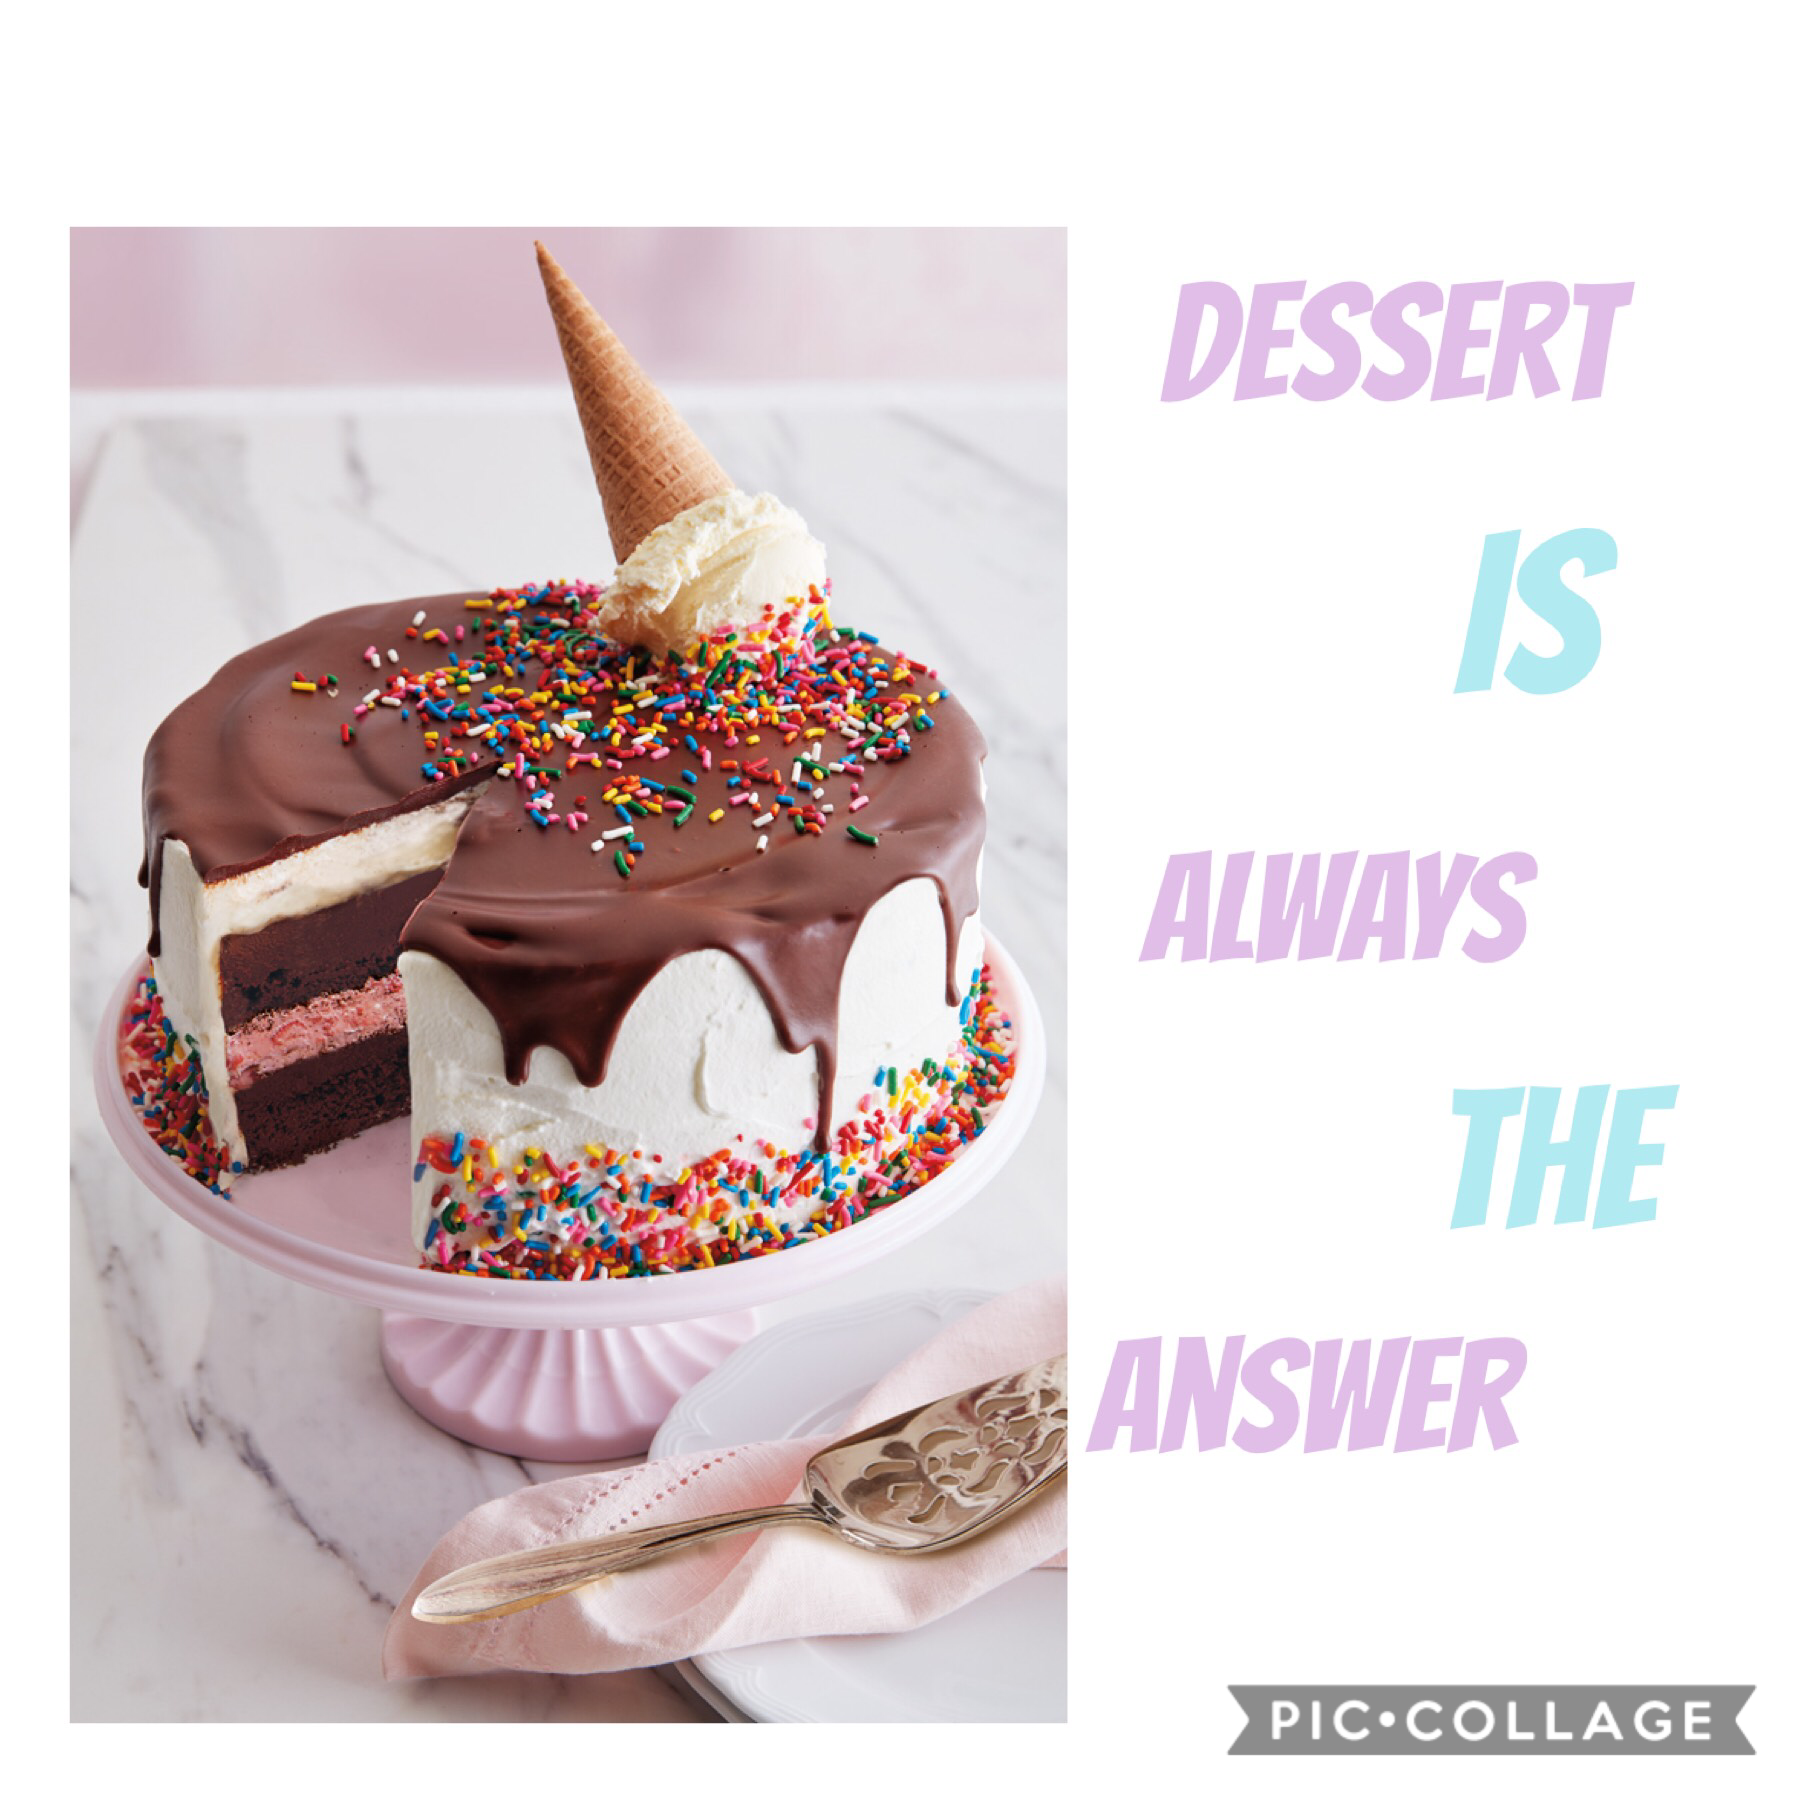 Dessert is always the answer